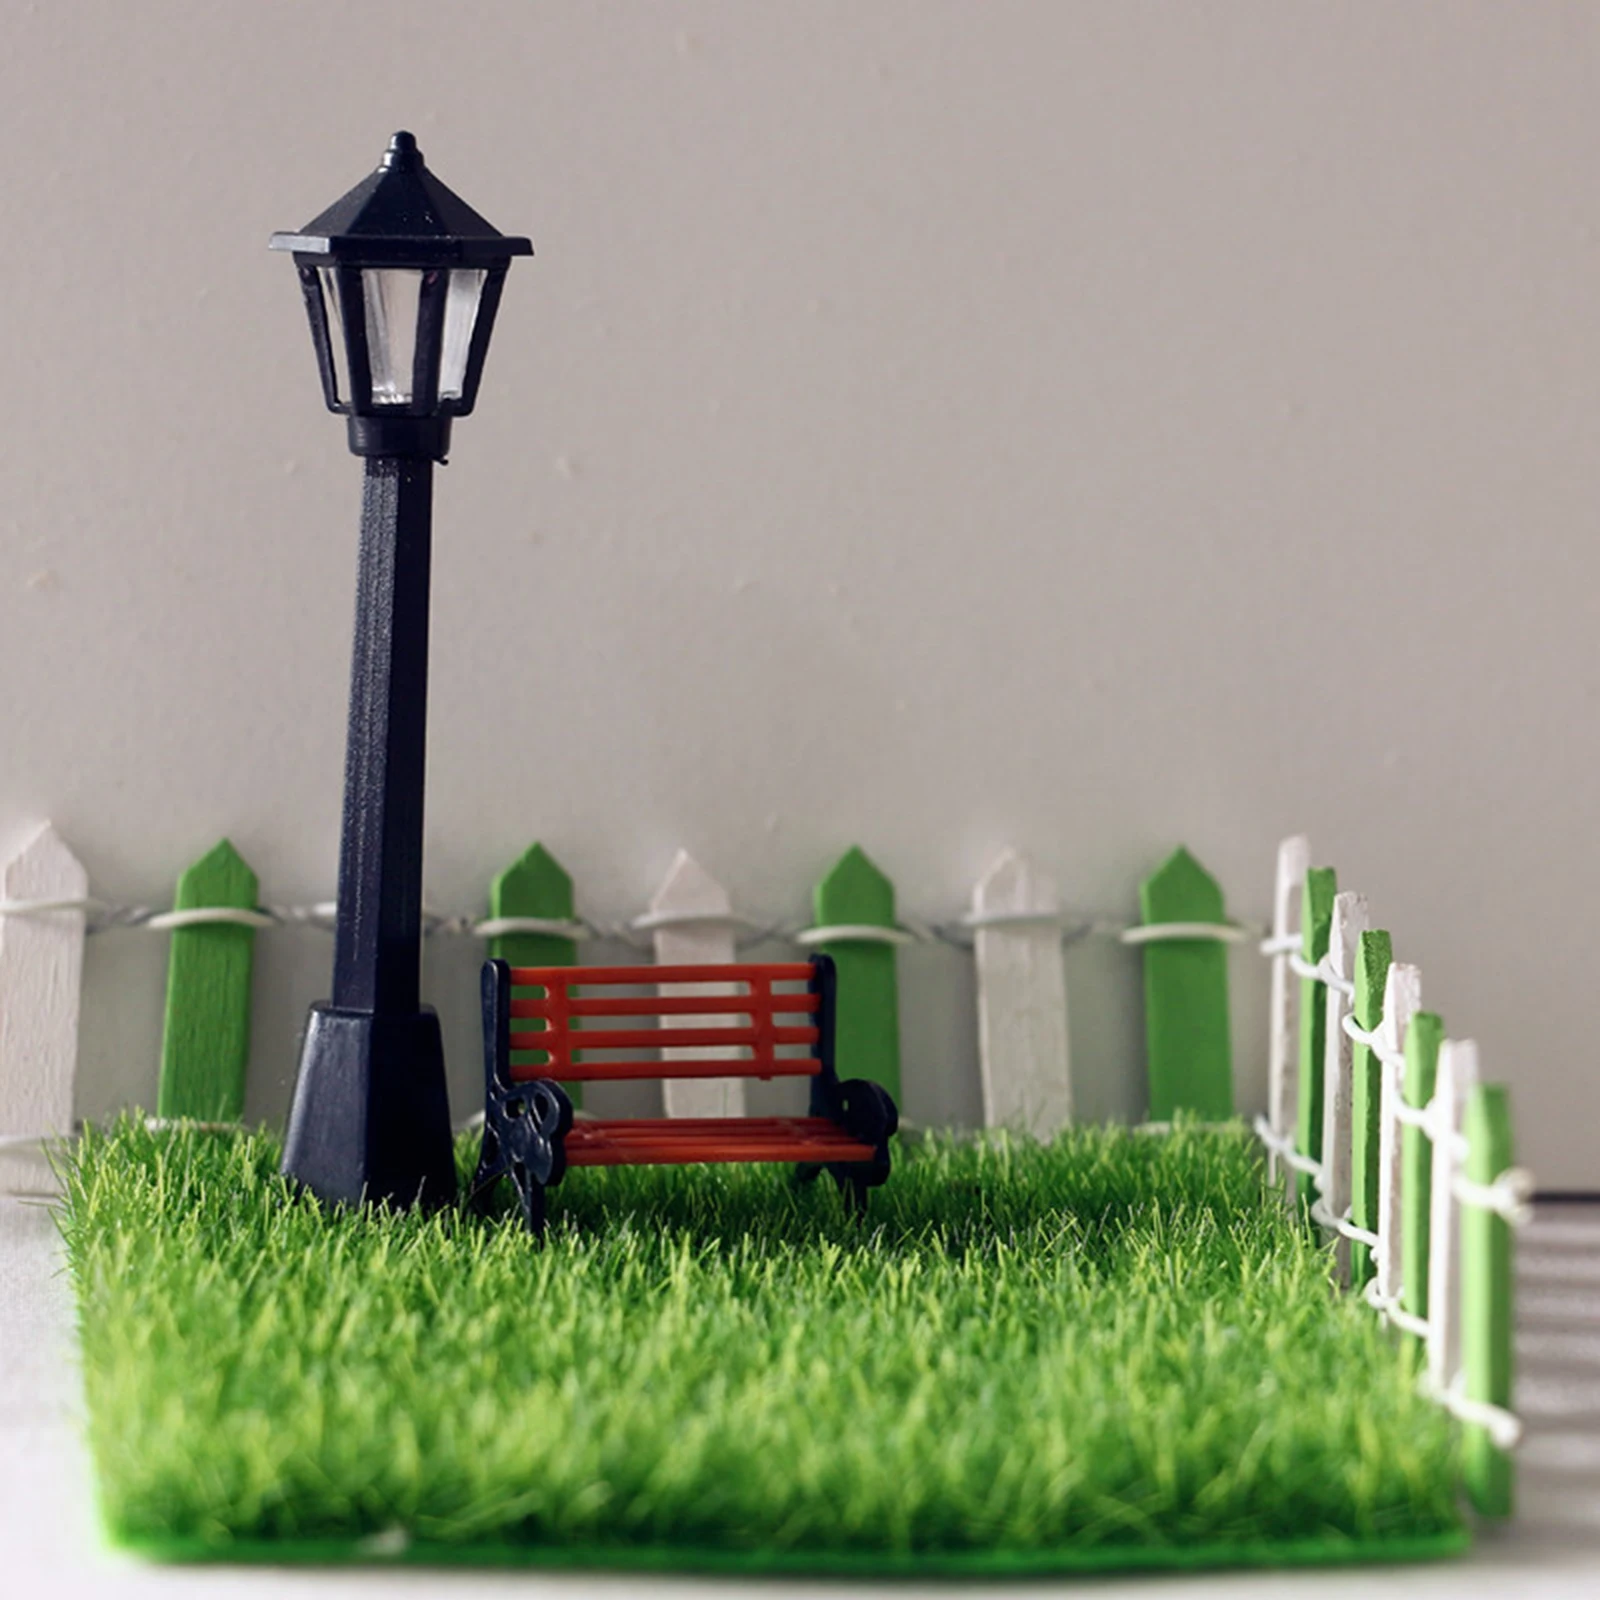 1/12 Doll House Outdoor Garden Street Light Garden Bench Landscape Creative